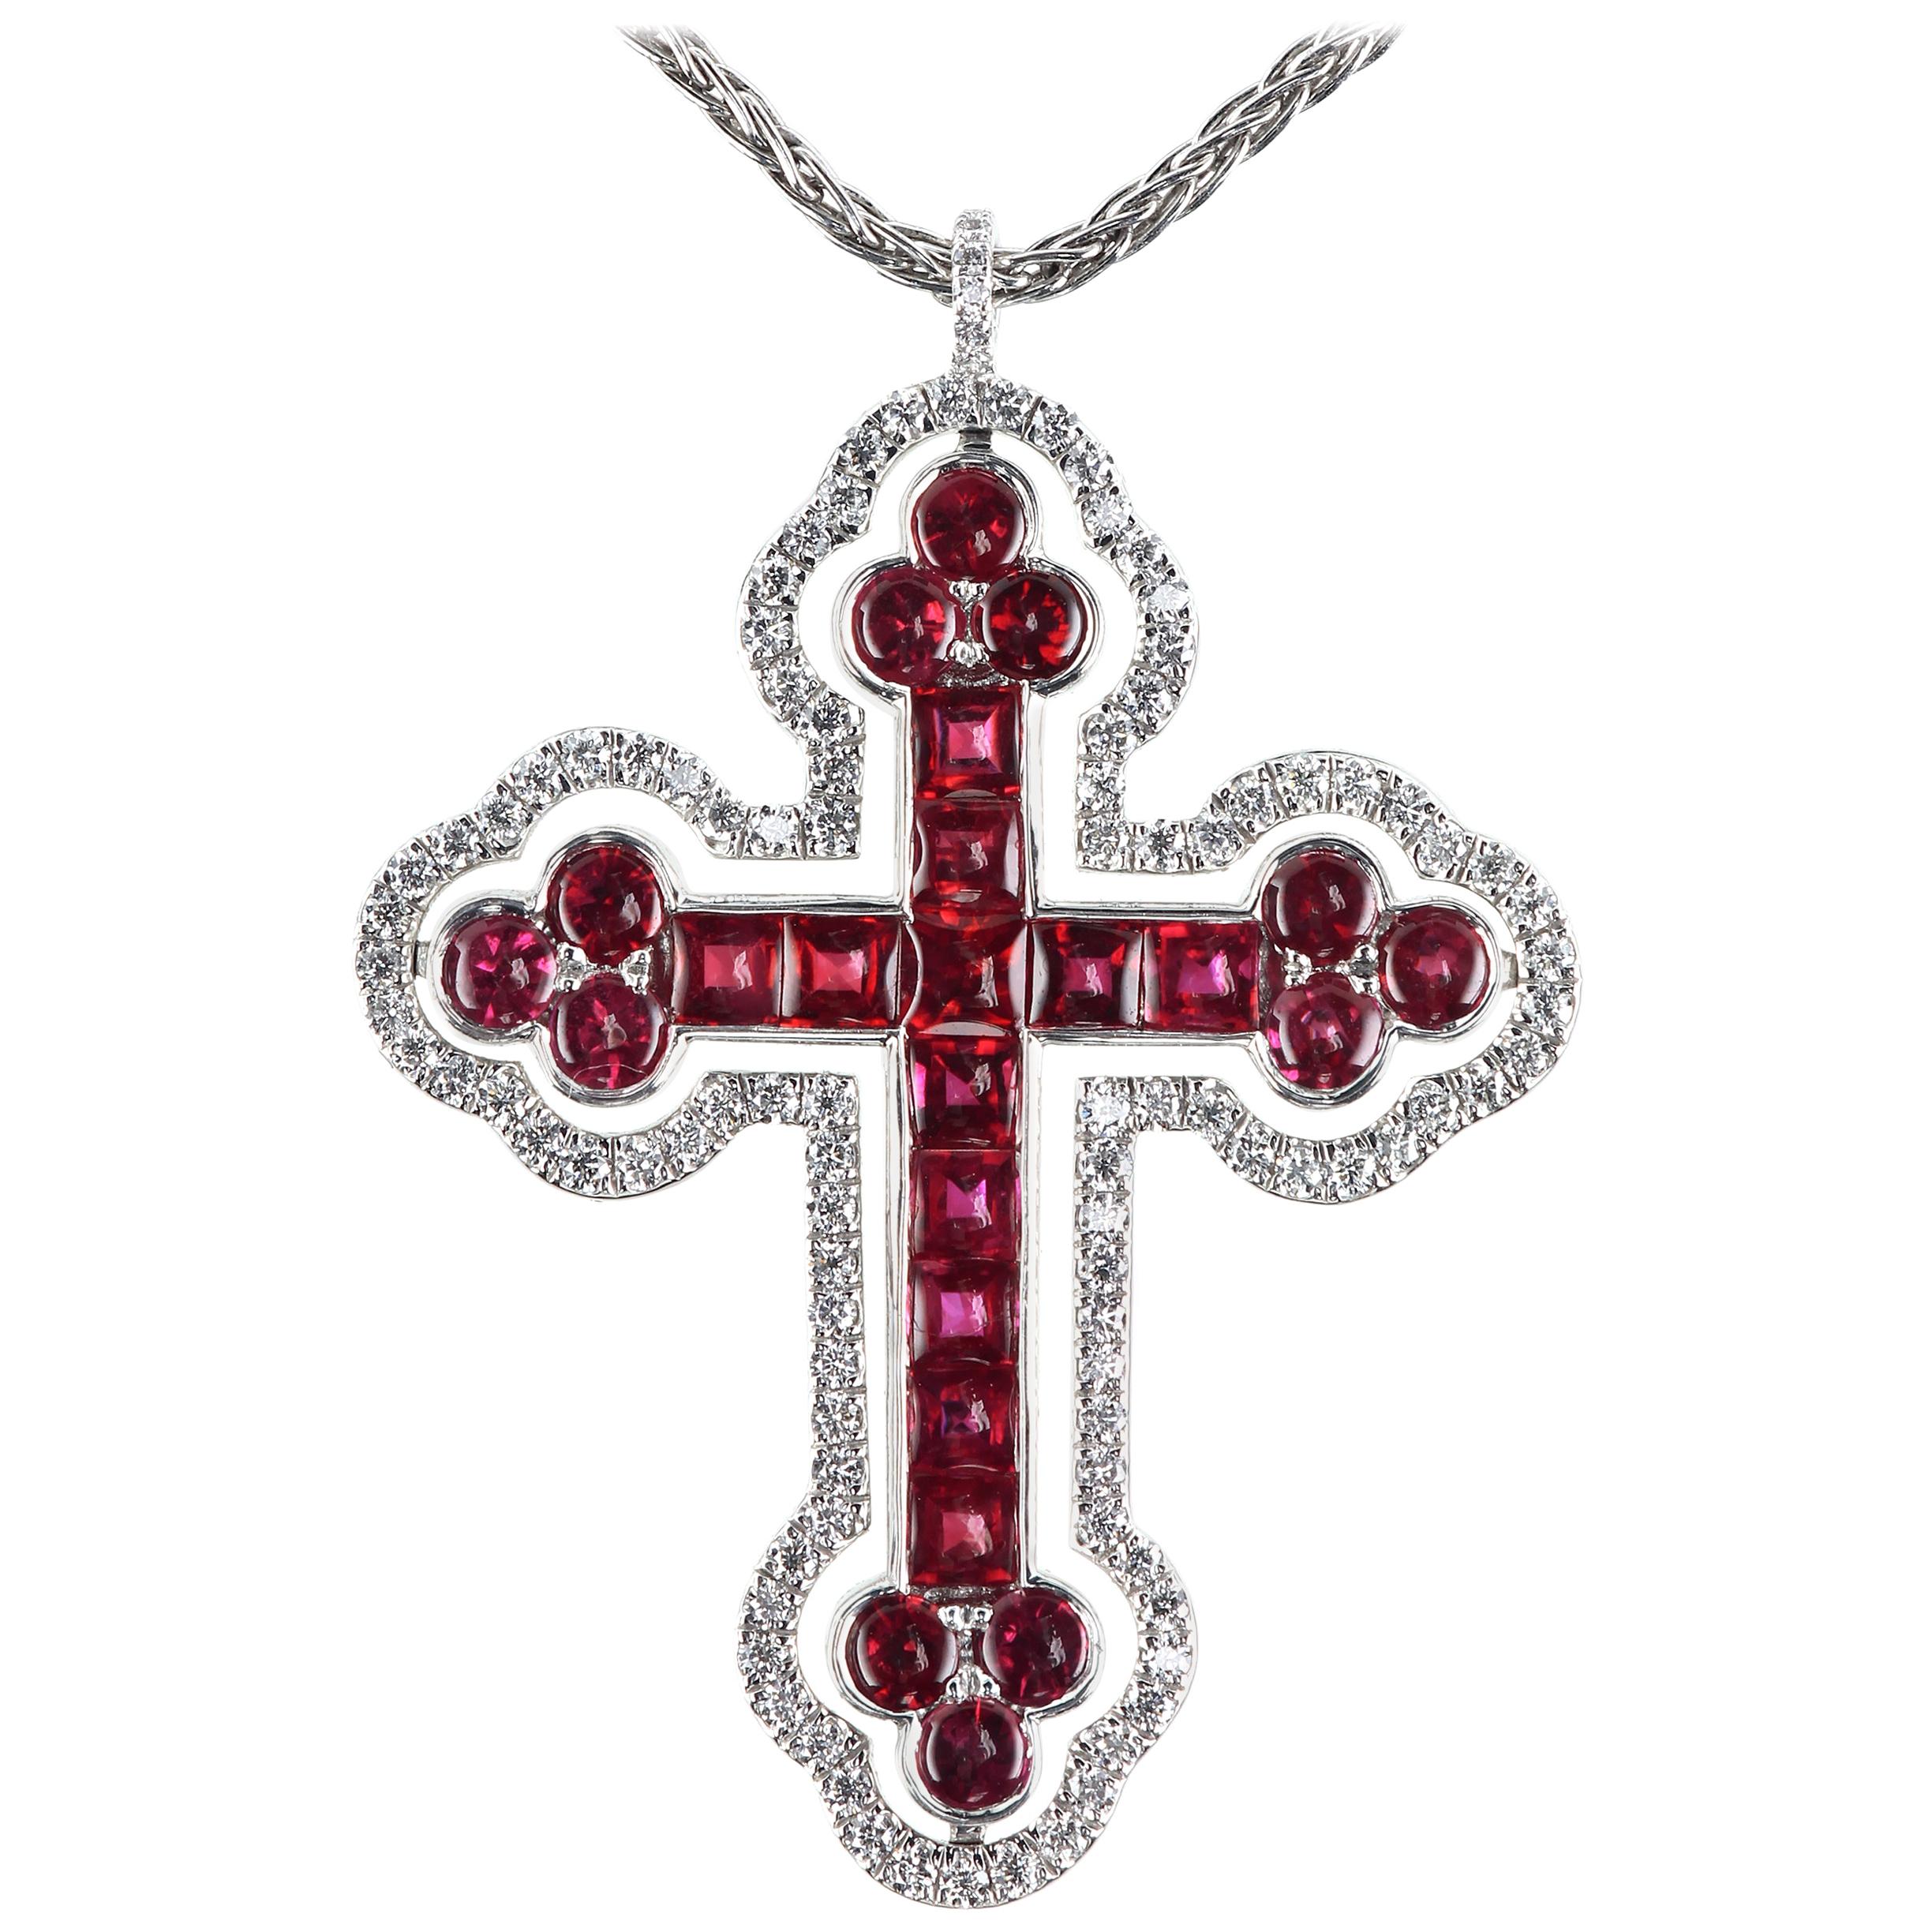 Leon Mege Greek Orthodox Cross with Rubies and Diamonds in Platinum